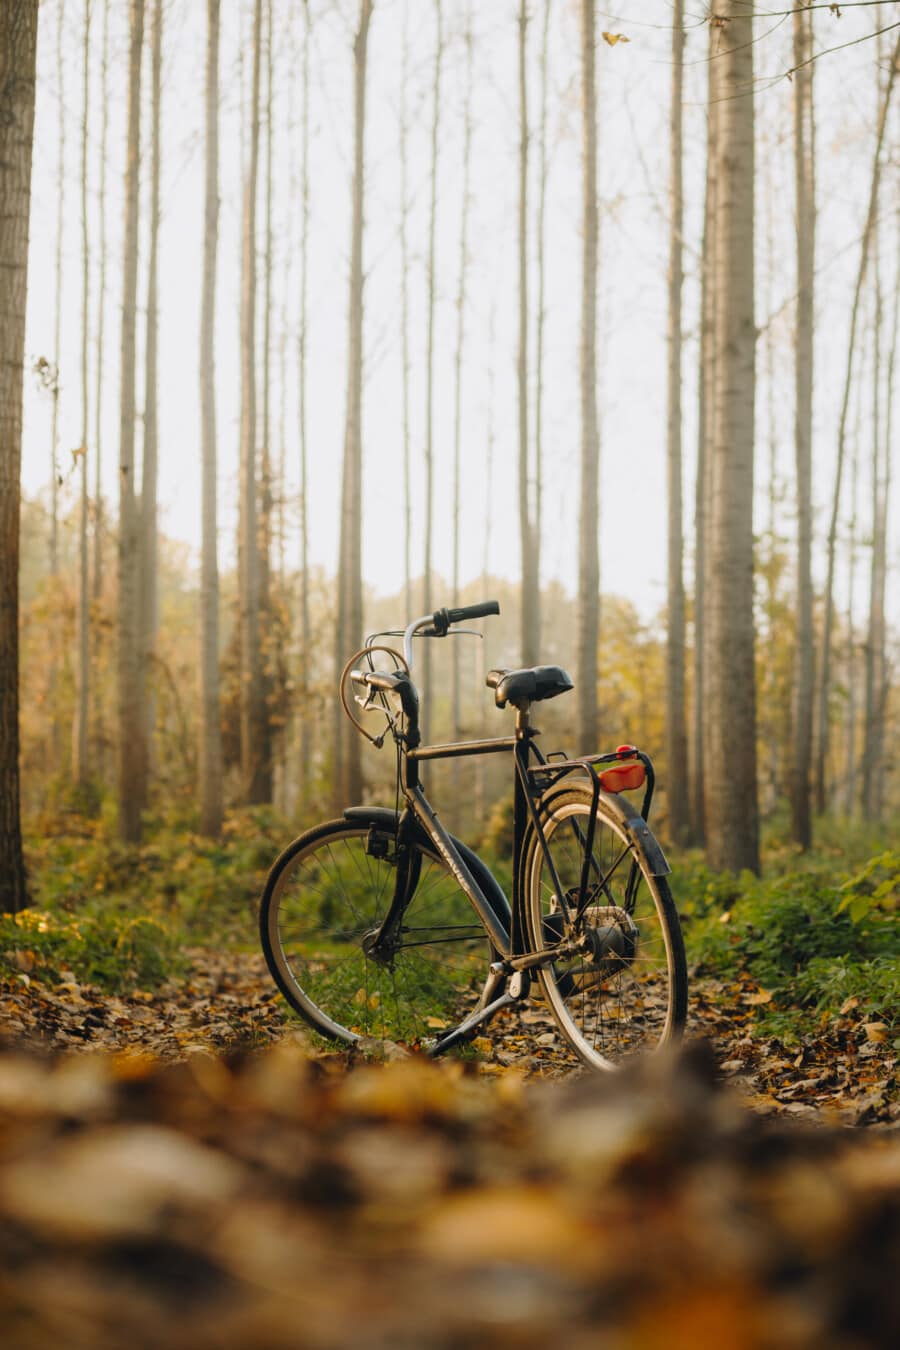 Fahrrad, Schwarz, Klassiker, Waldweg, Herbstsaison, Fahrrad, Natur, im freien, Trail, Fahrzeug